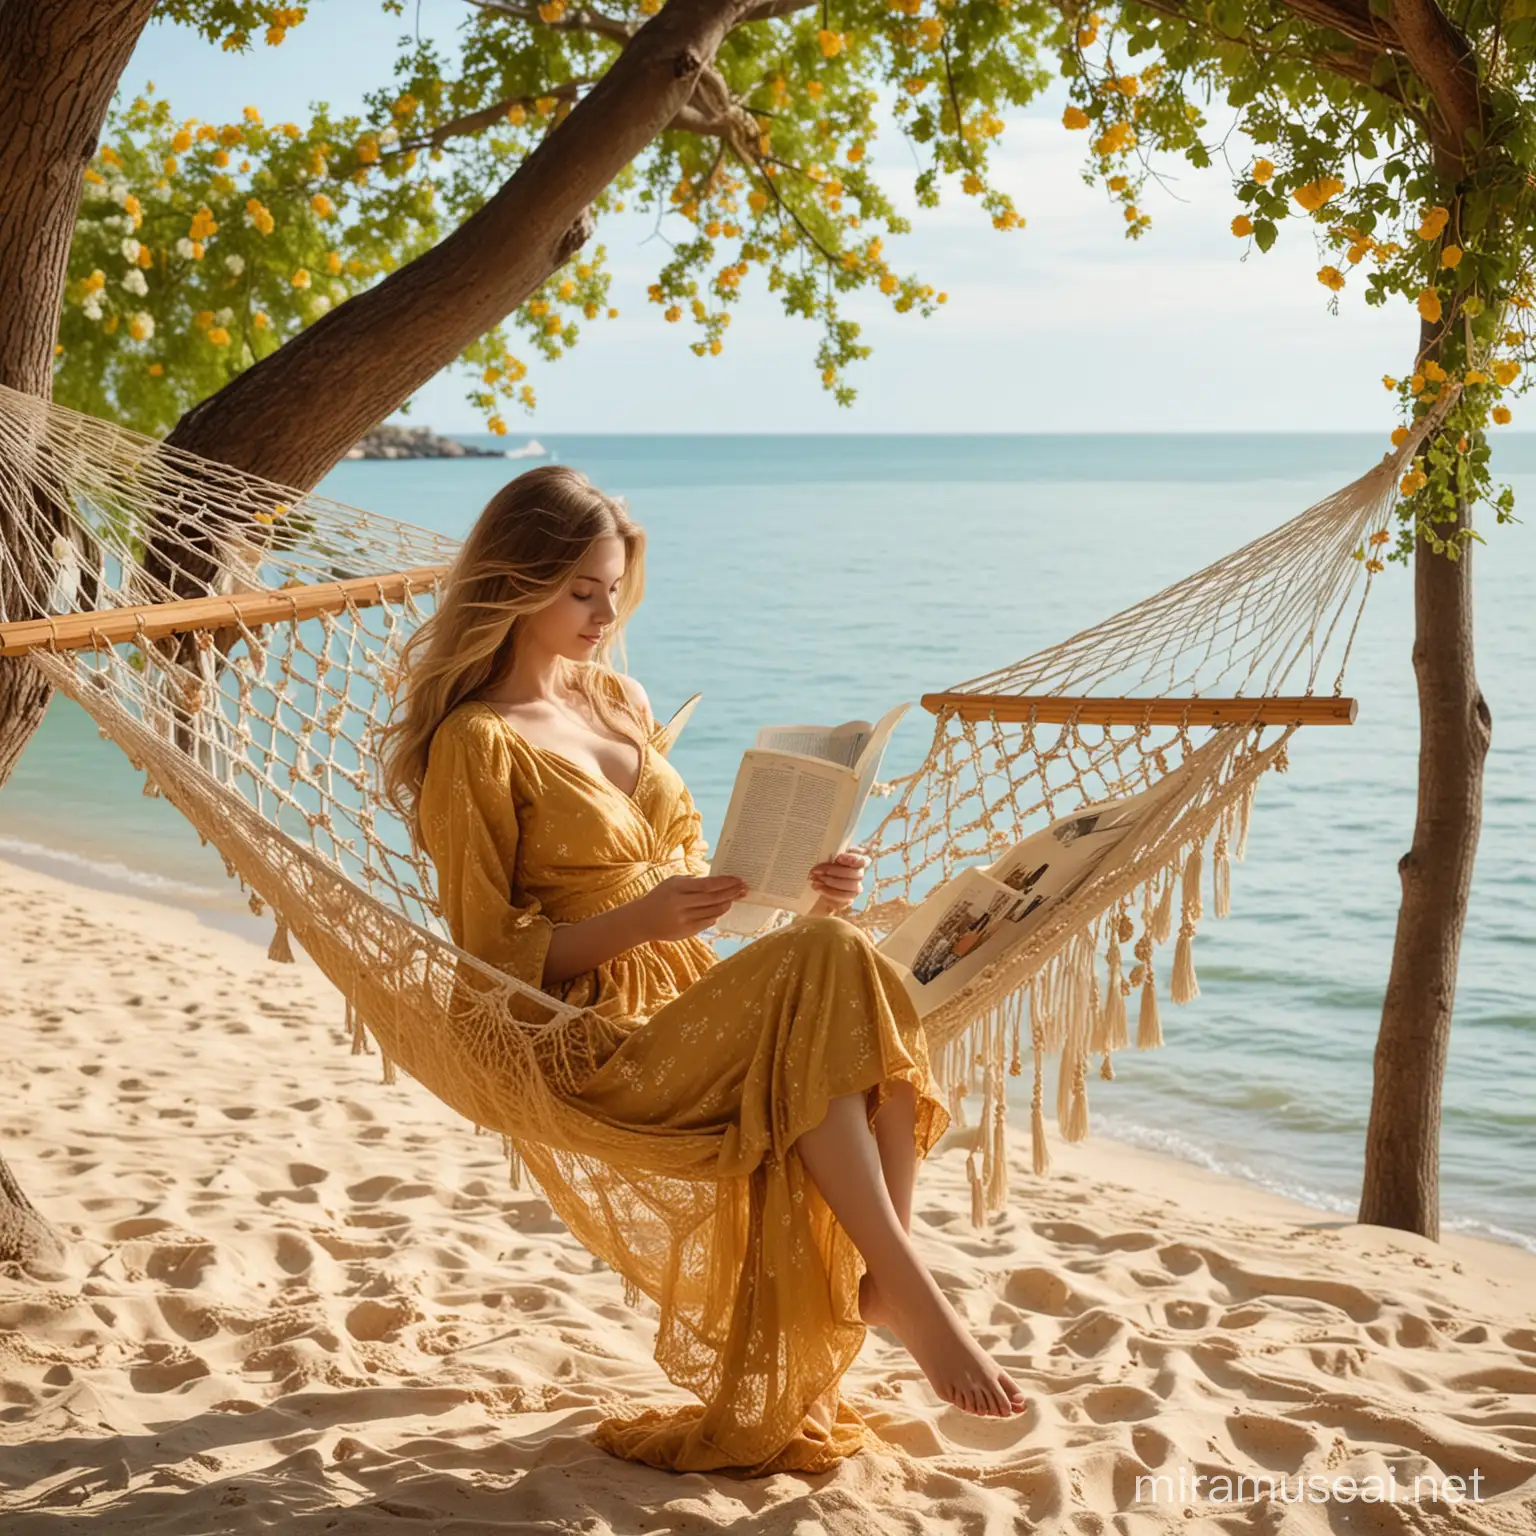 Seaside Serenity Girl in Golden Dress Relaxing in Hammock with Book